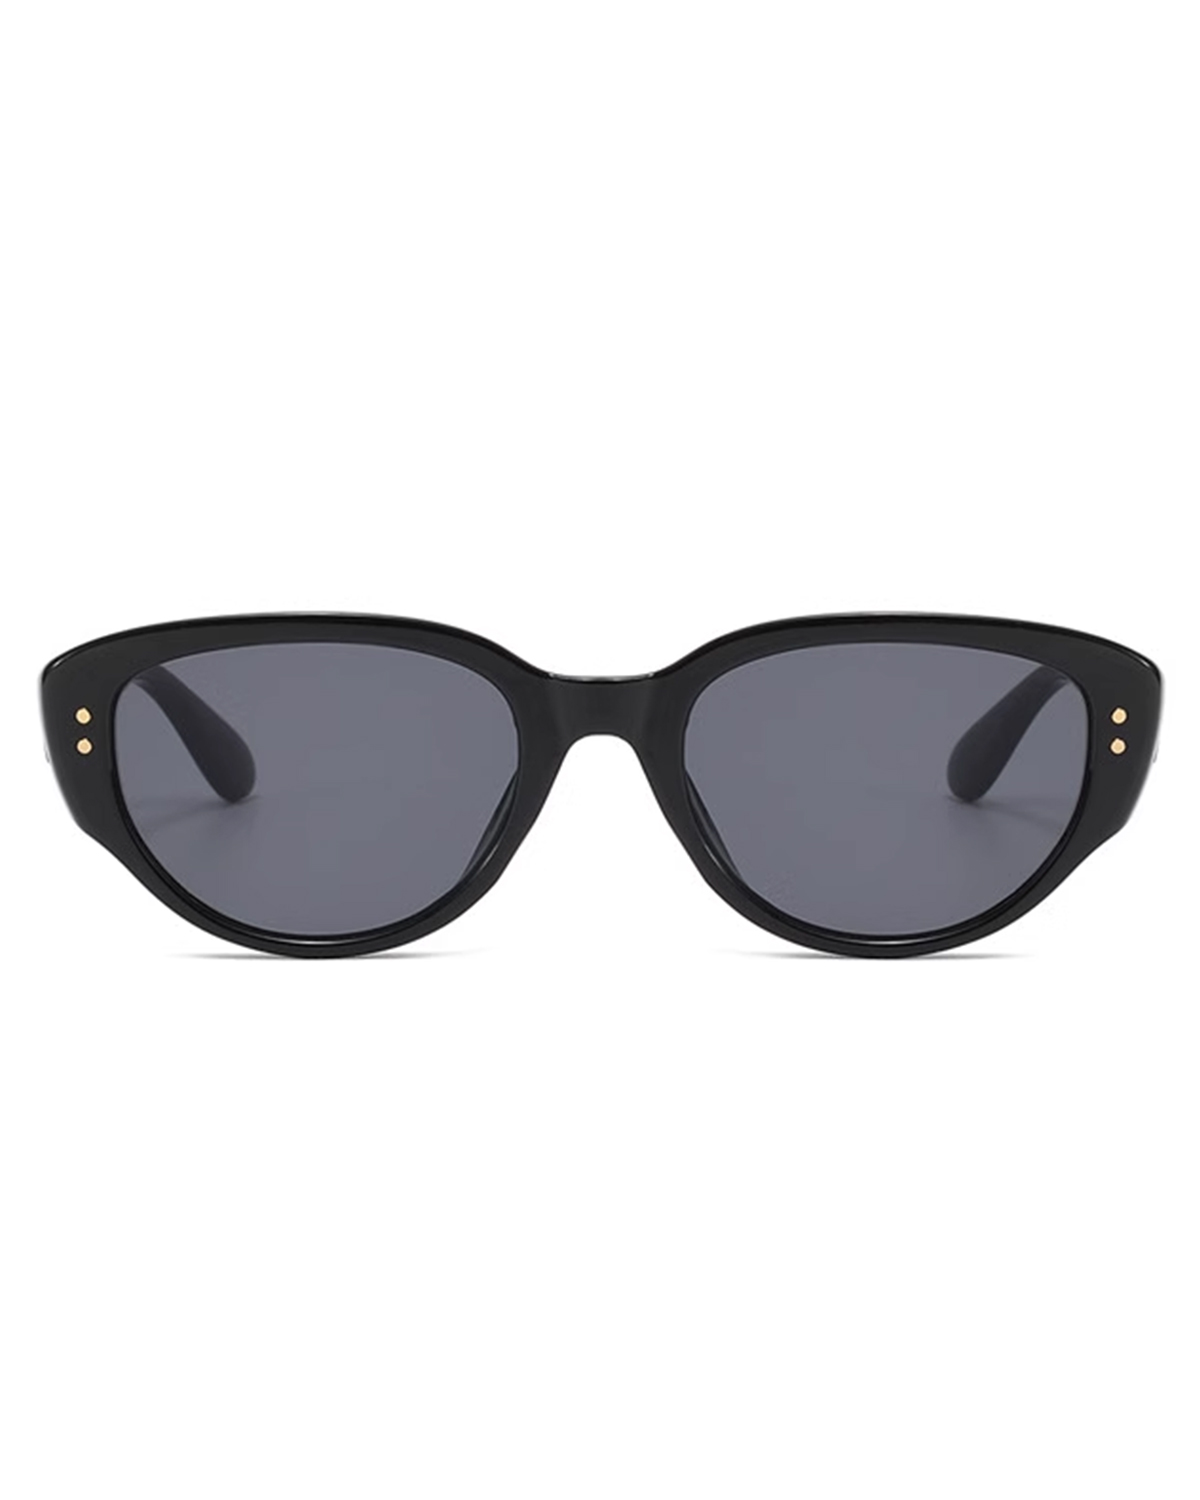 Vintage Cat Eye Sunglasses #SG002-TERAISE